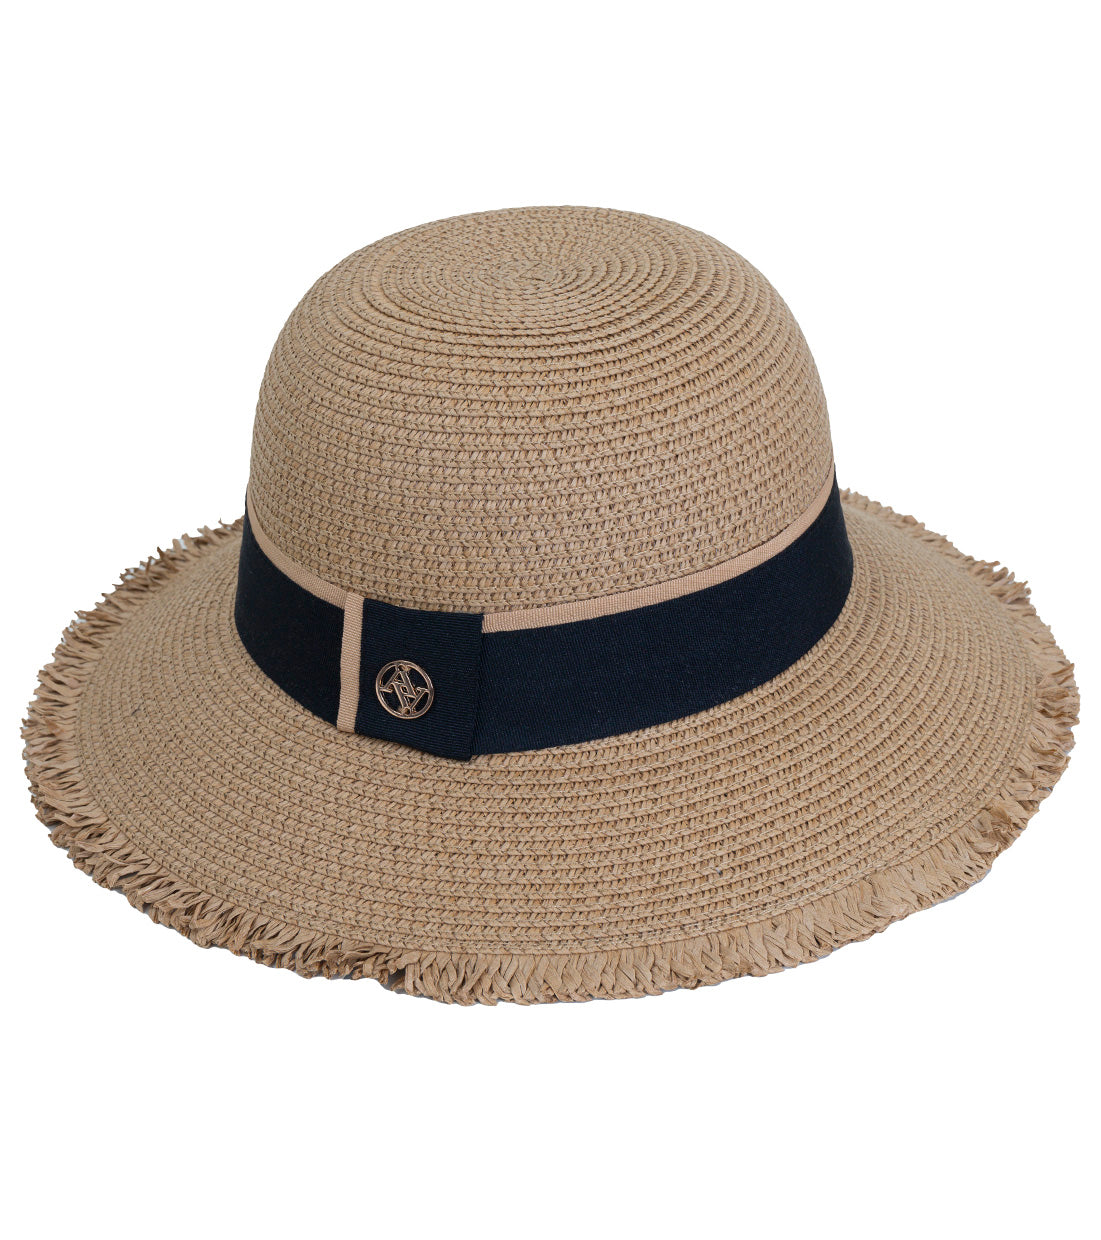 title:Adrienne Vittadini Straw Hat 329S;color:TOAST